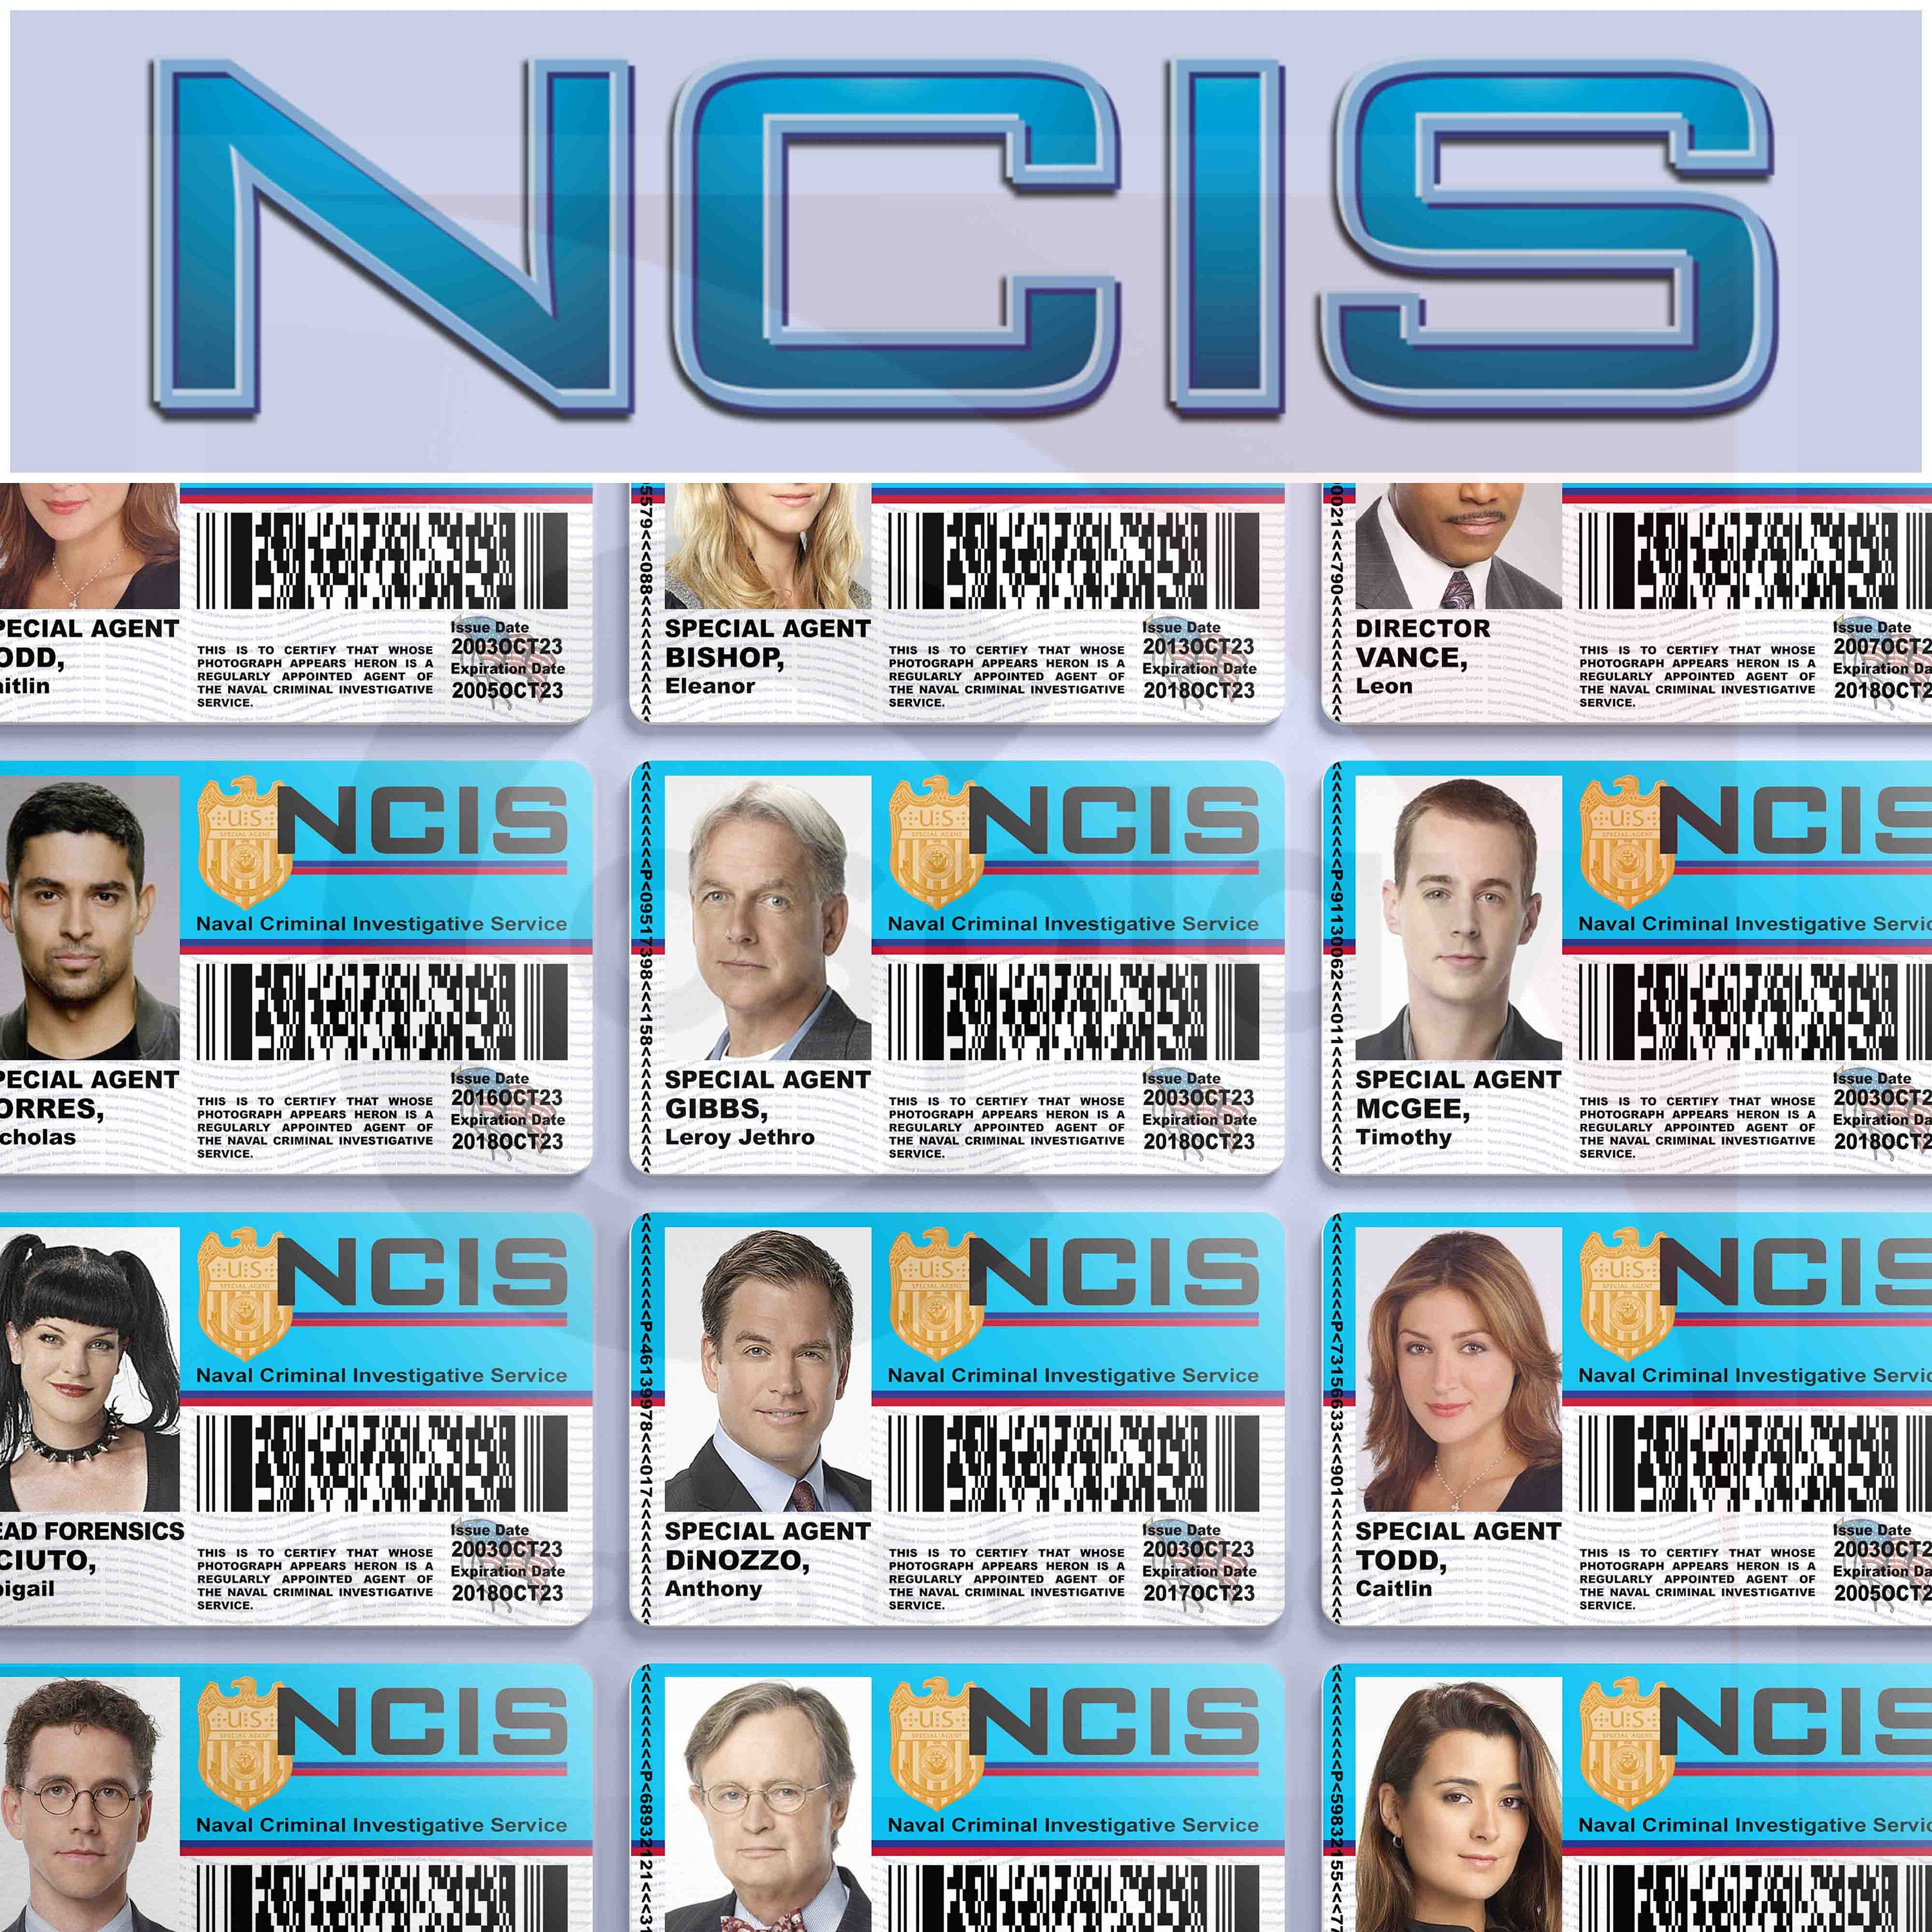 NCIS Novelty TV Show ID Card Special Agent Gibbs Dinozzo